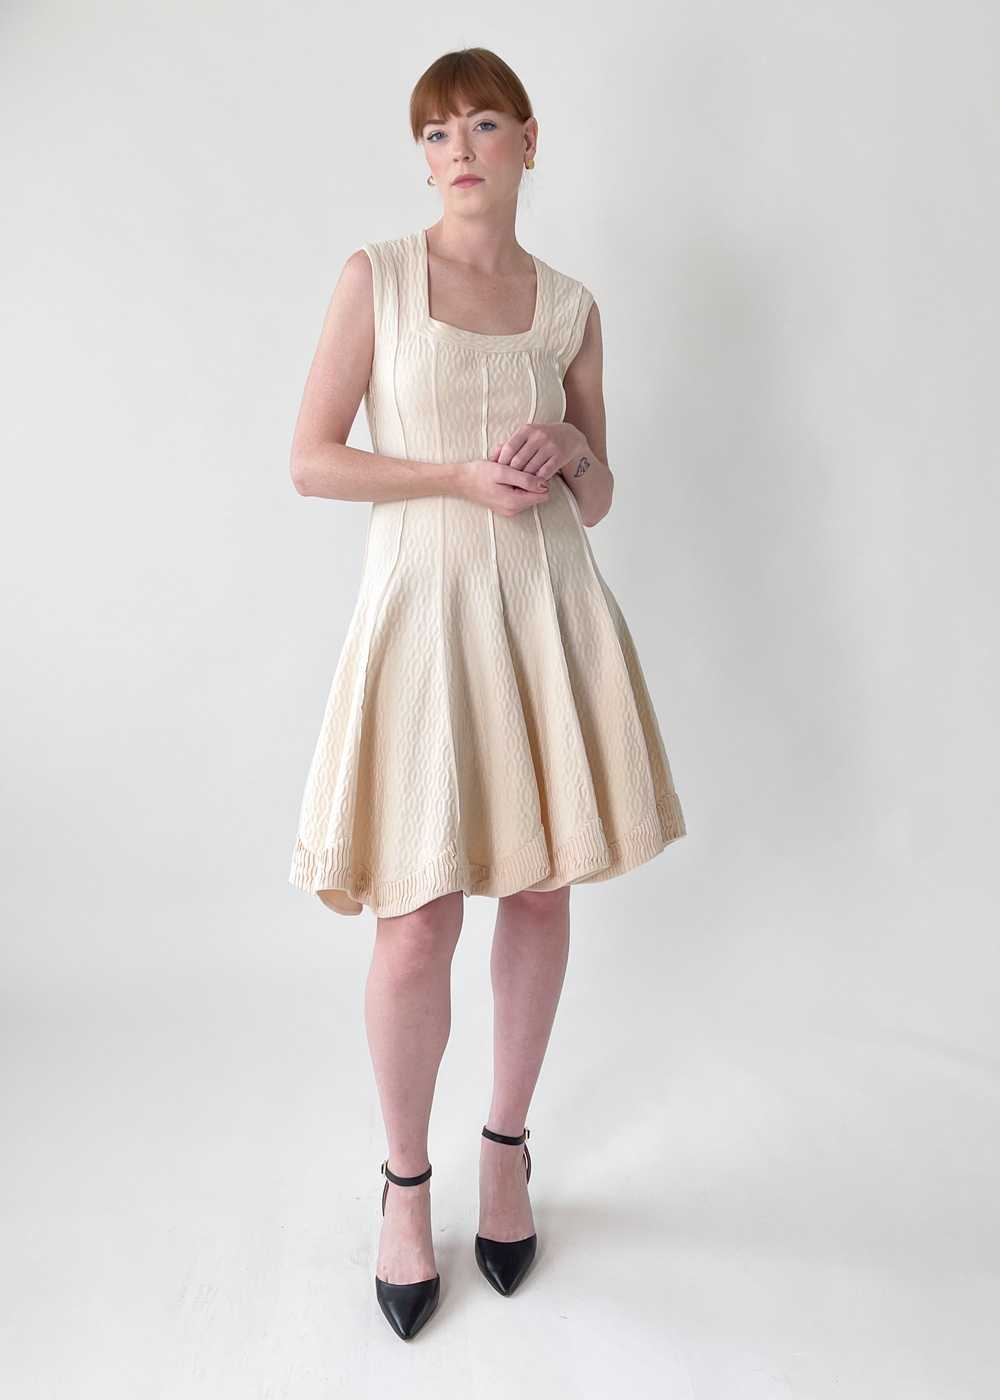 Alaia Textured Knit Dress - image 1